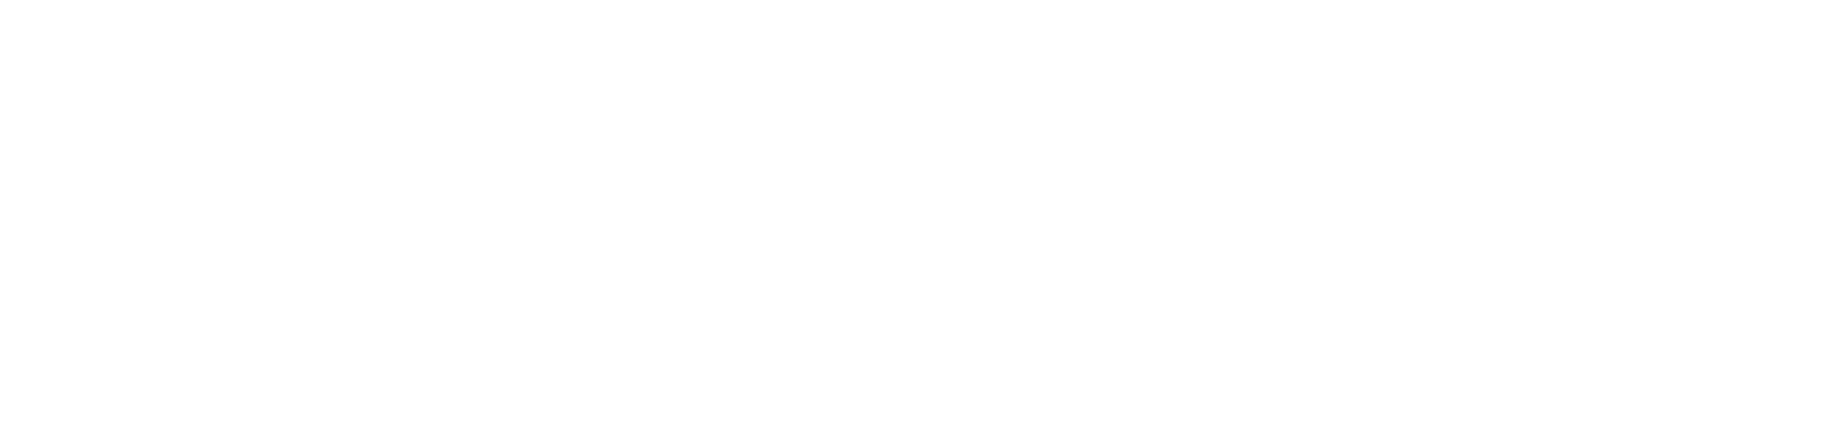 kubernates-io-logo